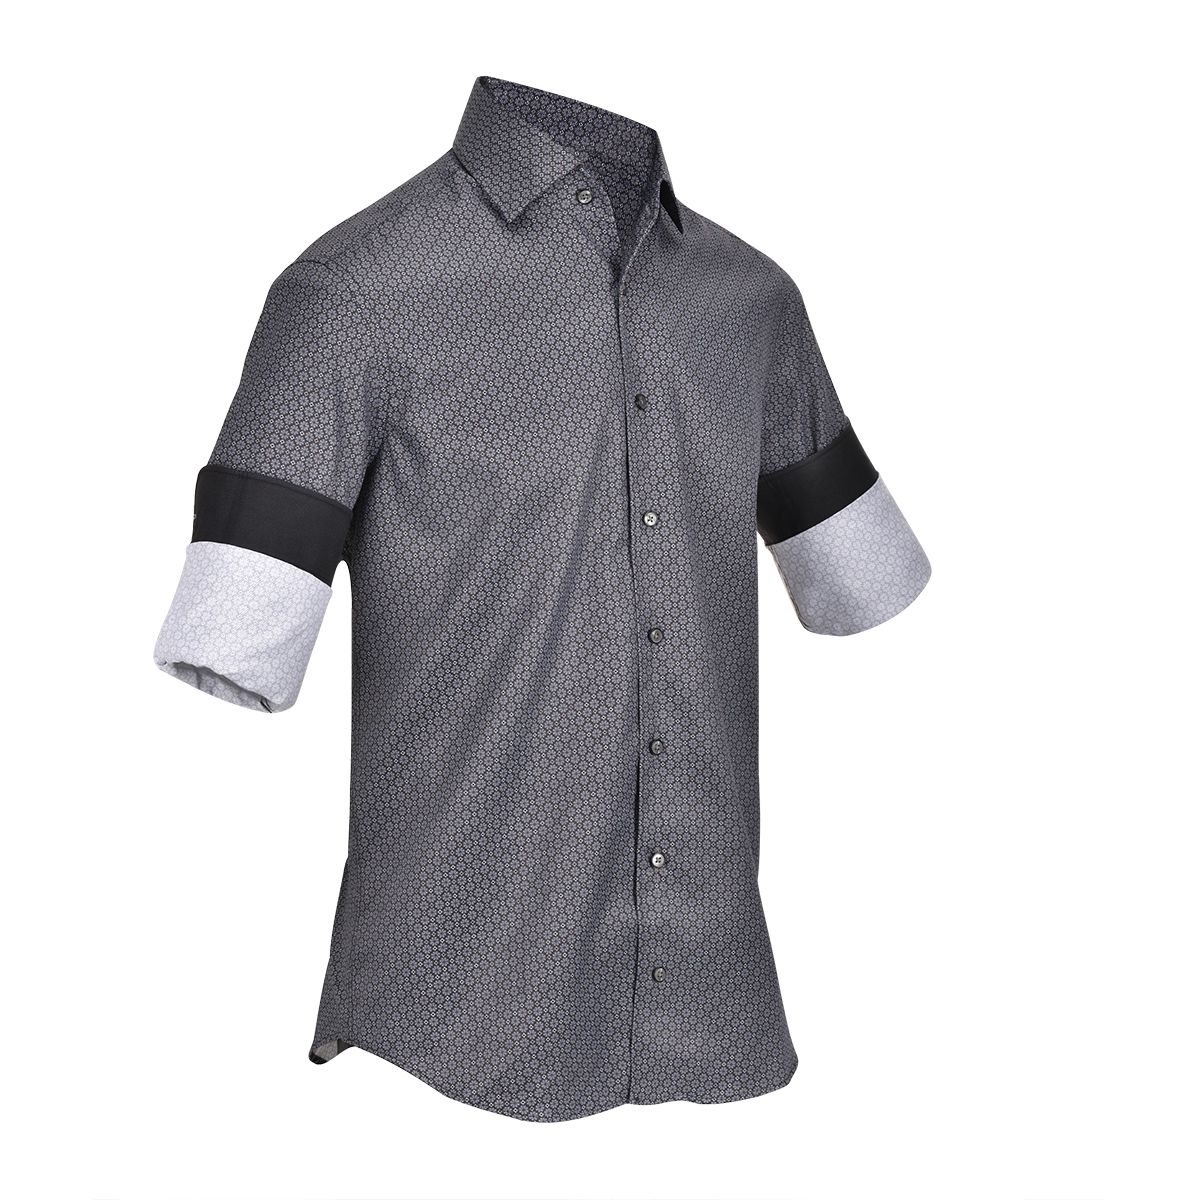 CMW556R - Cuadra black casual fashion cotton shirt for men-Kuet.us